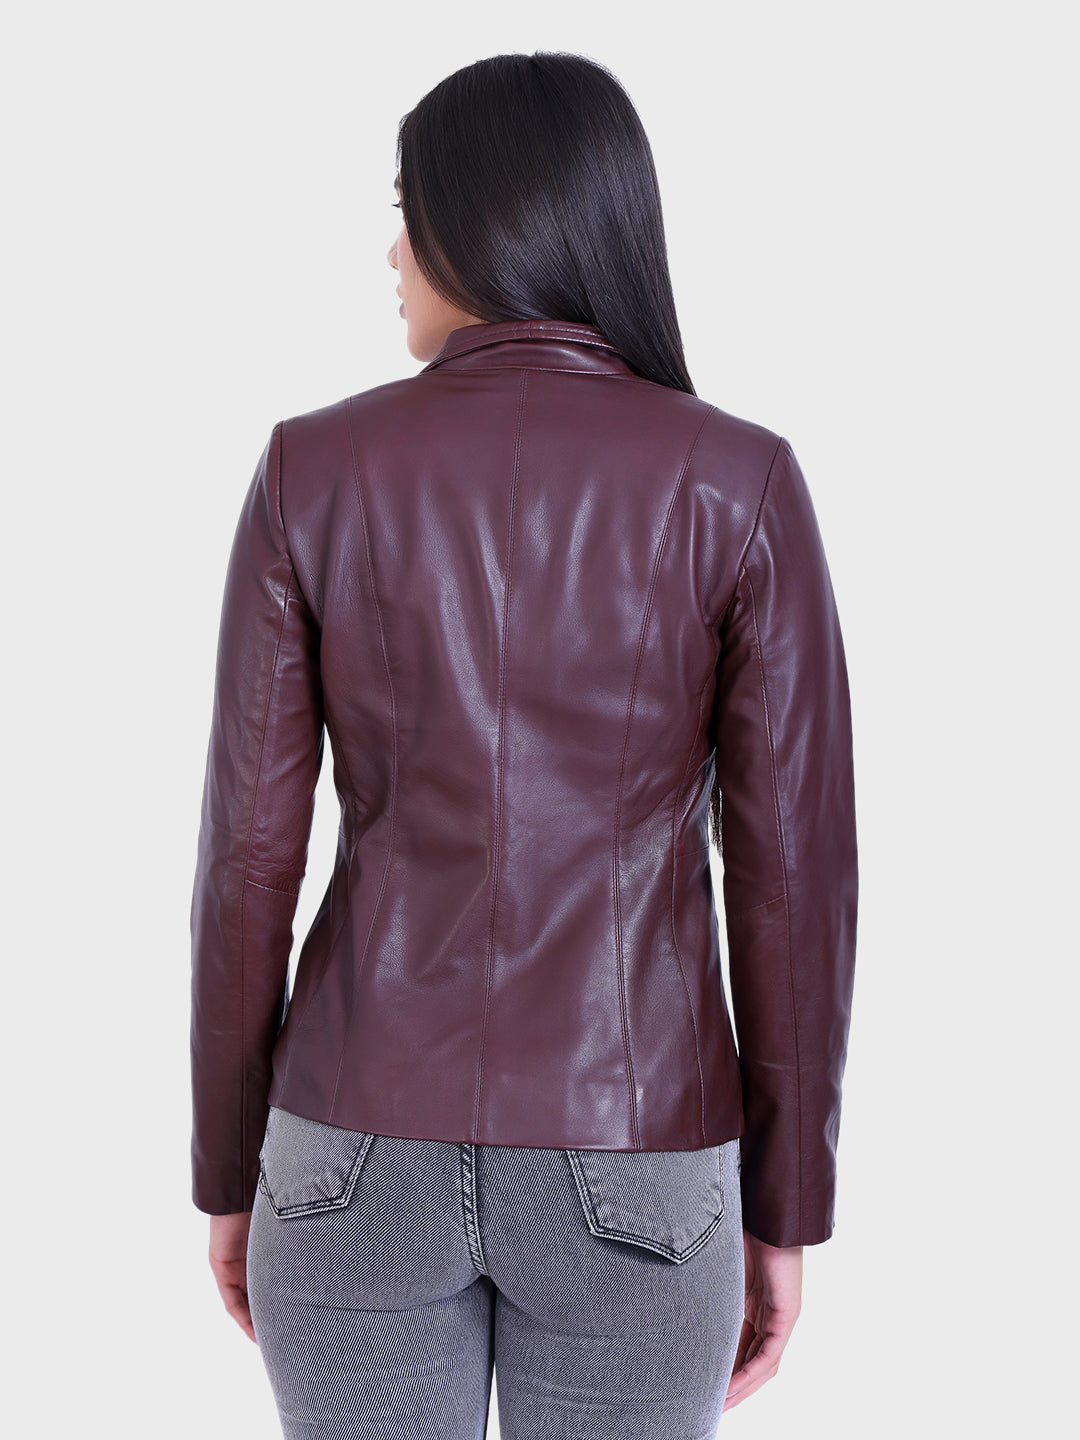 Justanned Burgundy Natural Leather Jacket